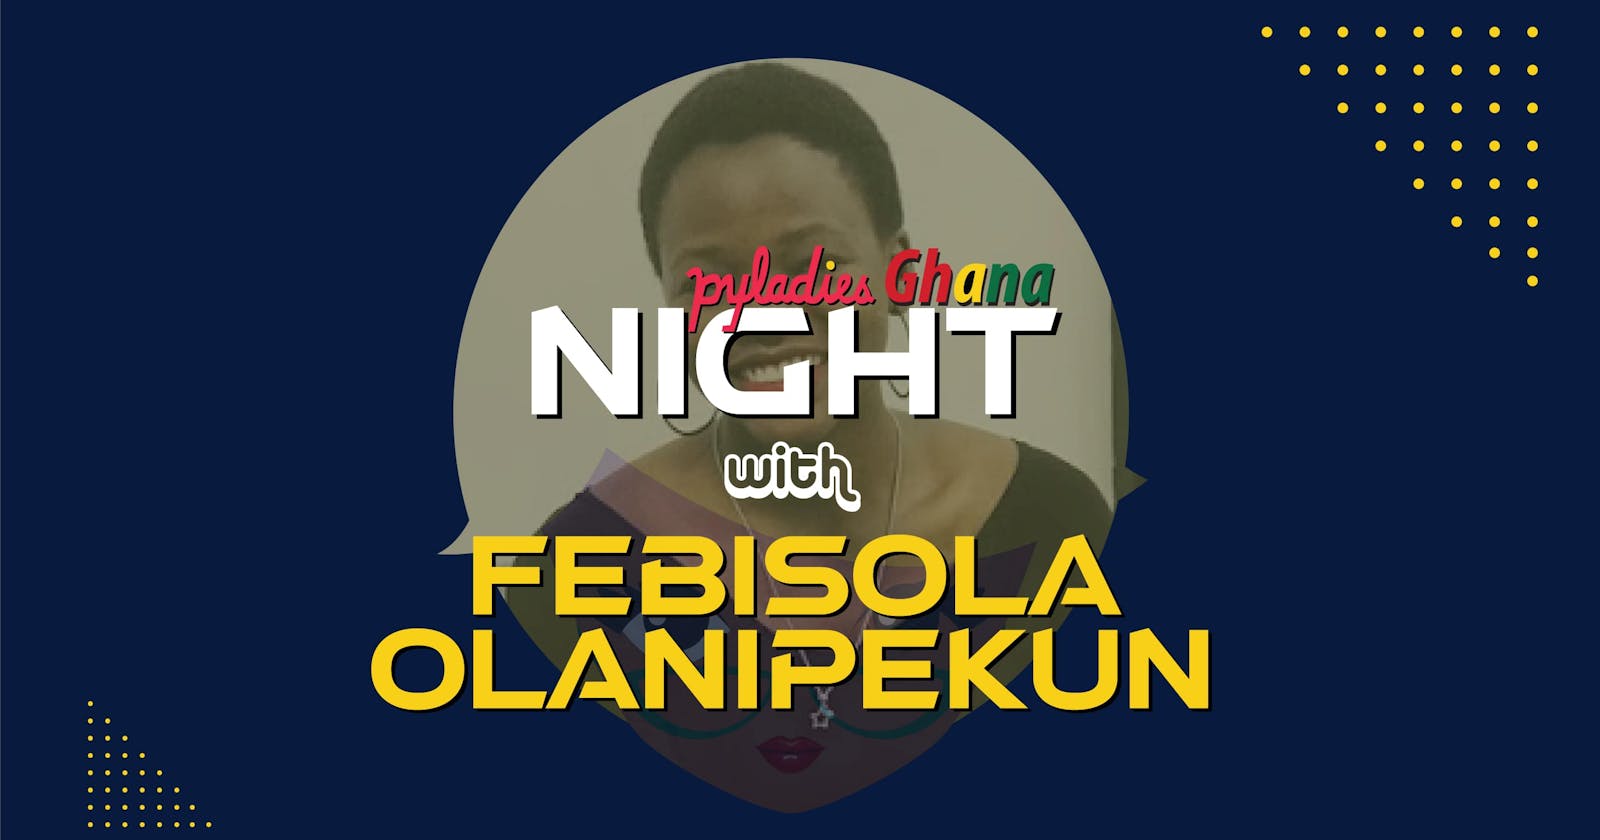 PyLadies Night with Febisola Olanipekun